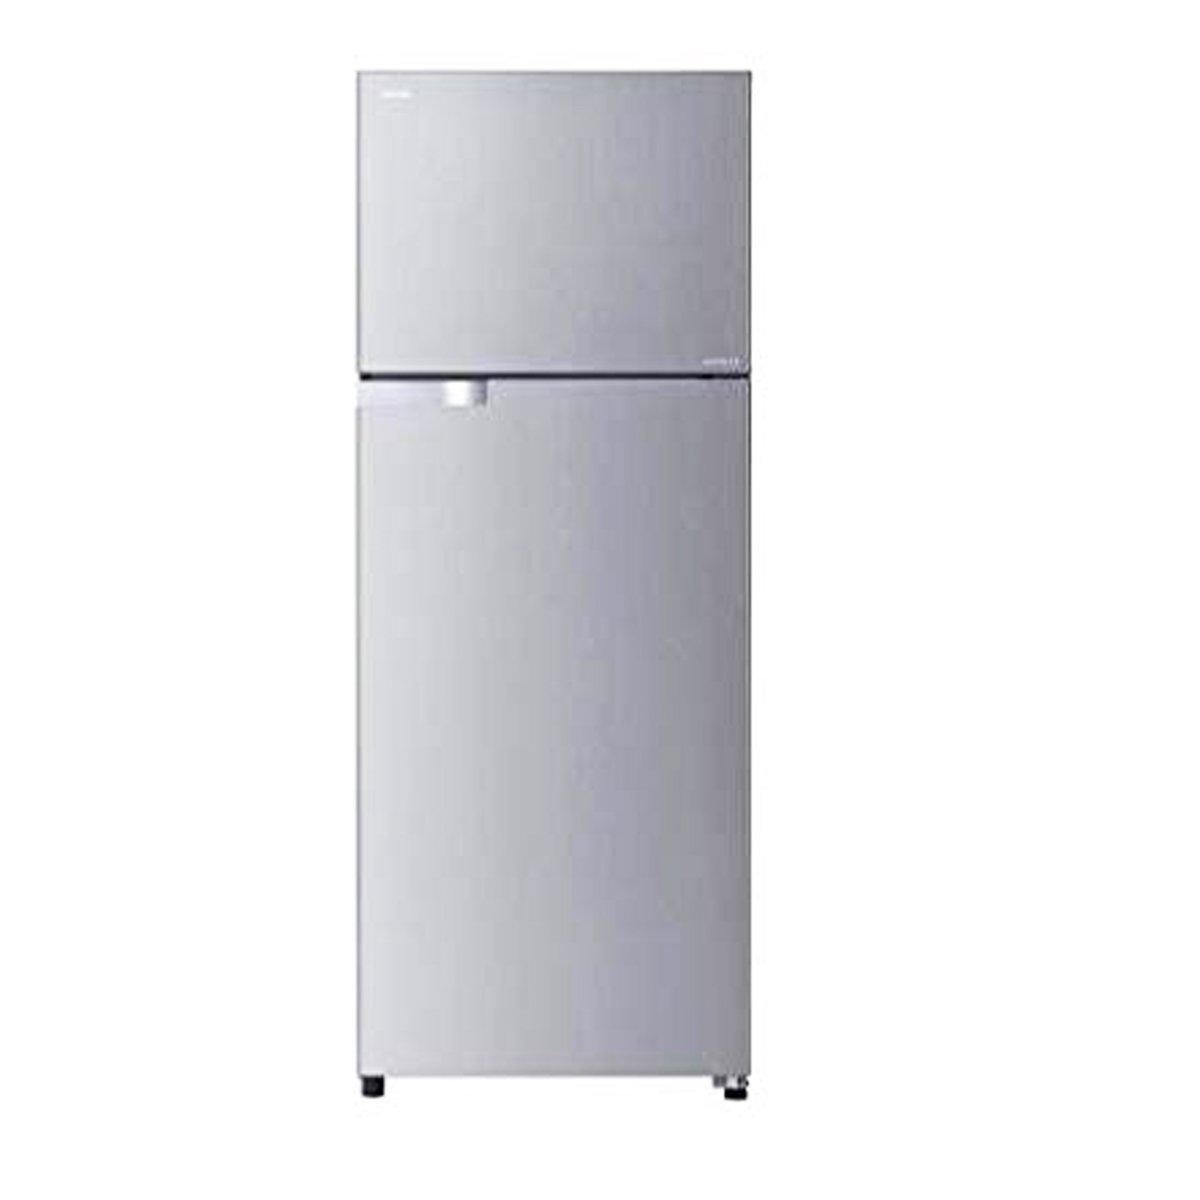 Toshiba Refrigerator GRA820ATEZS 618Ltr Silver